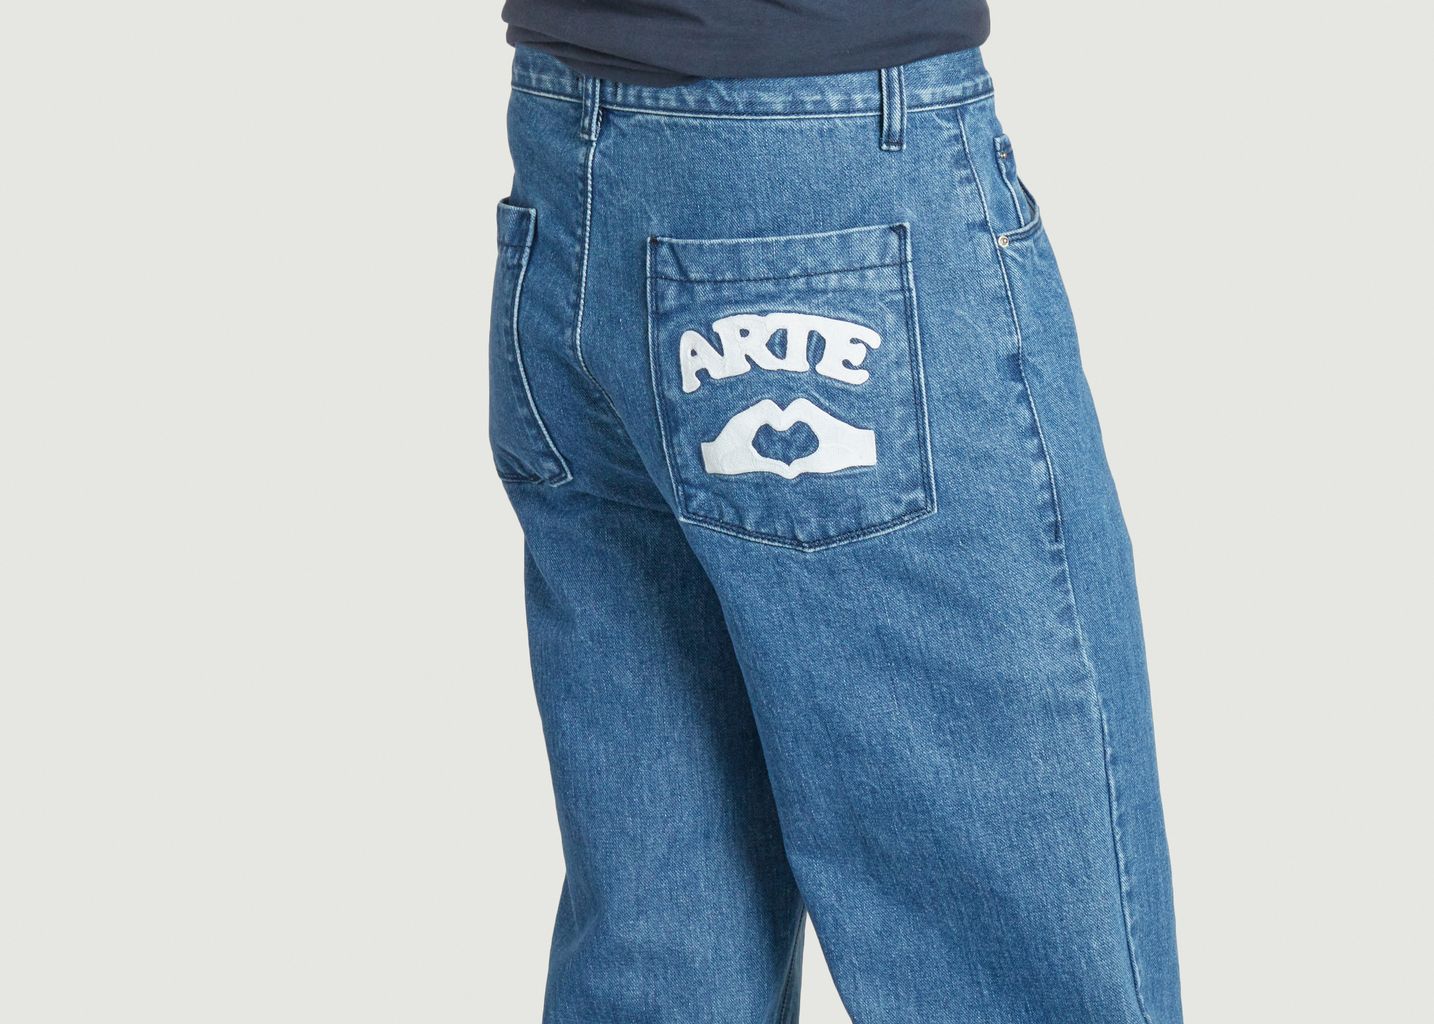 Denim jeans - Arte Antwerp